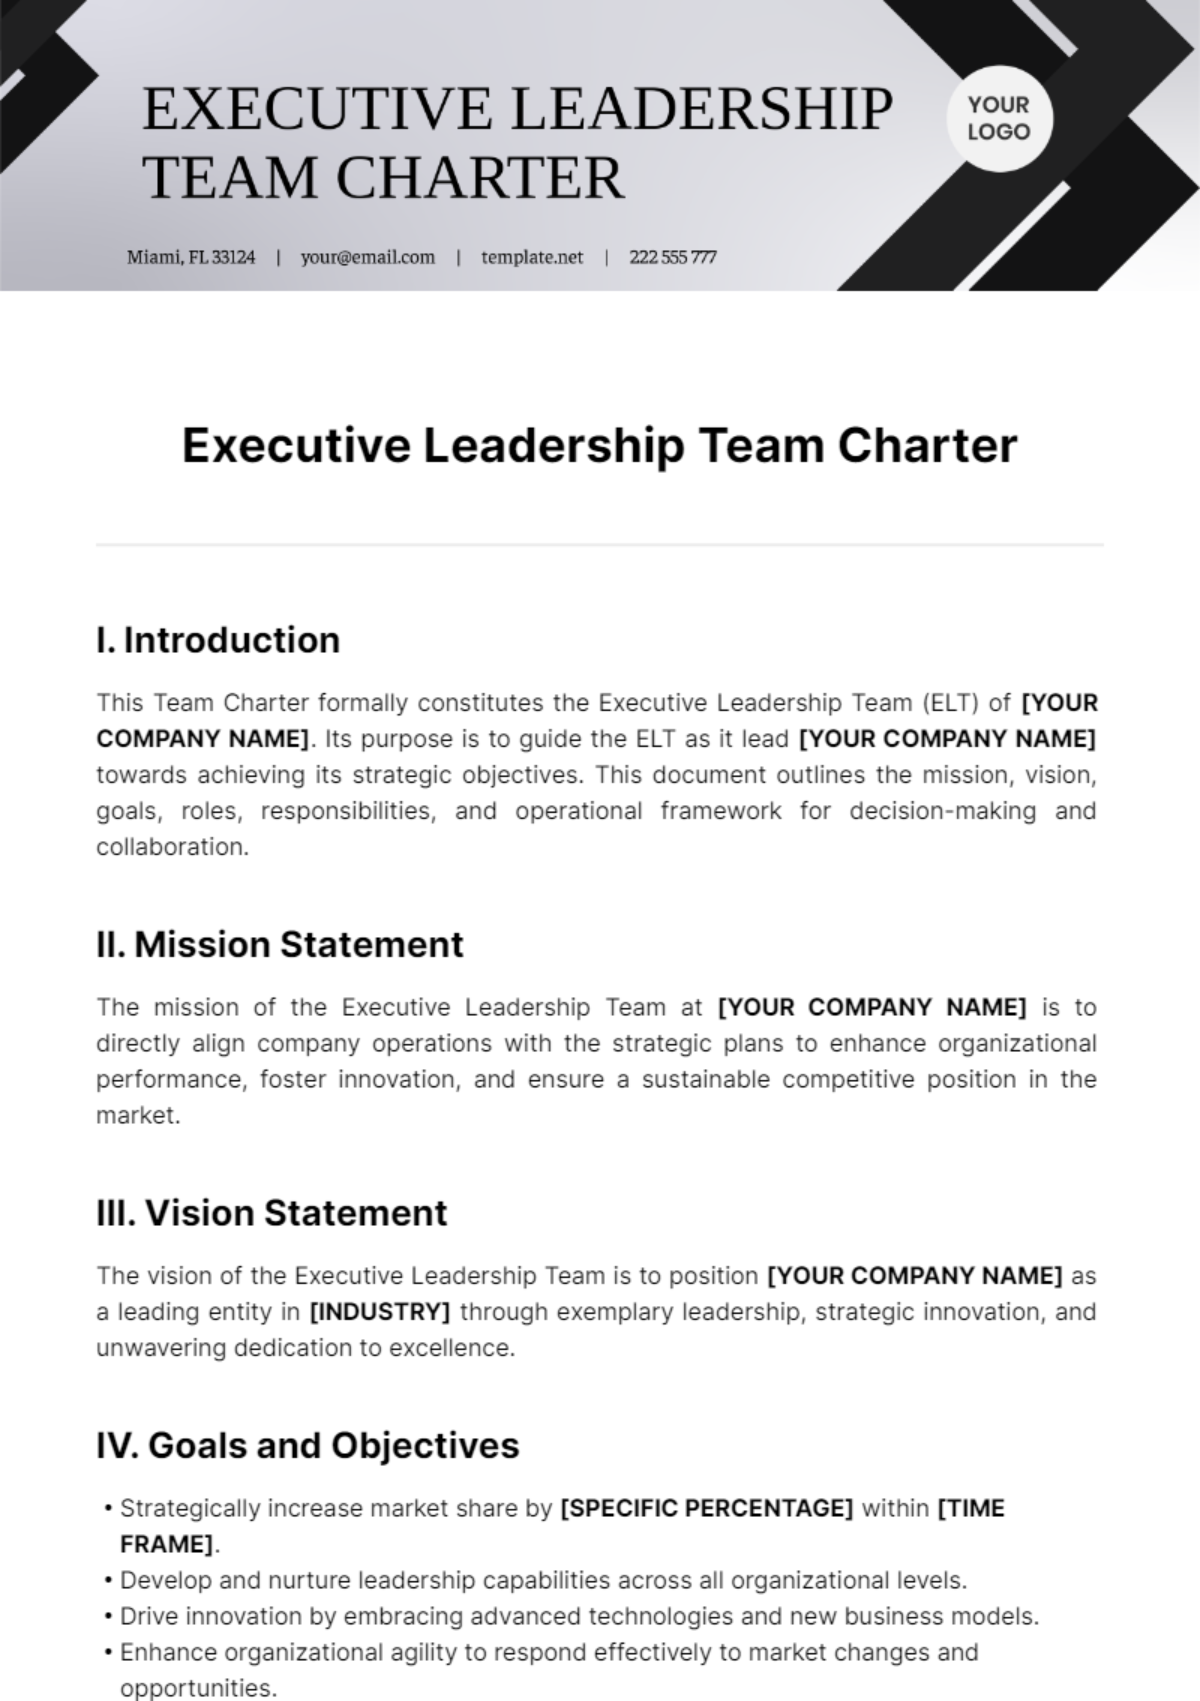 Executive Leadership Team Charter Template